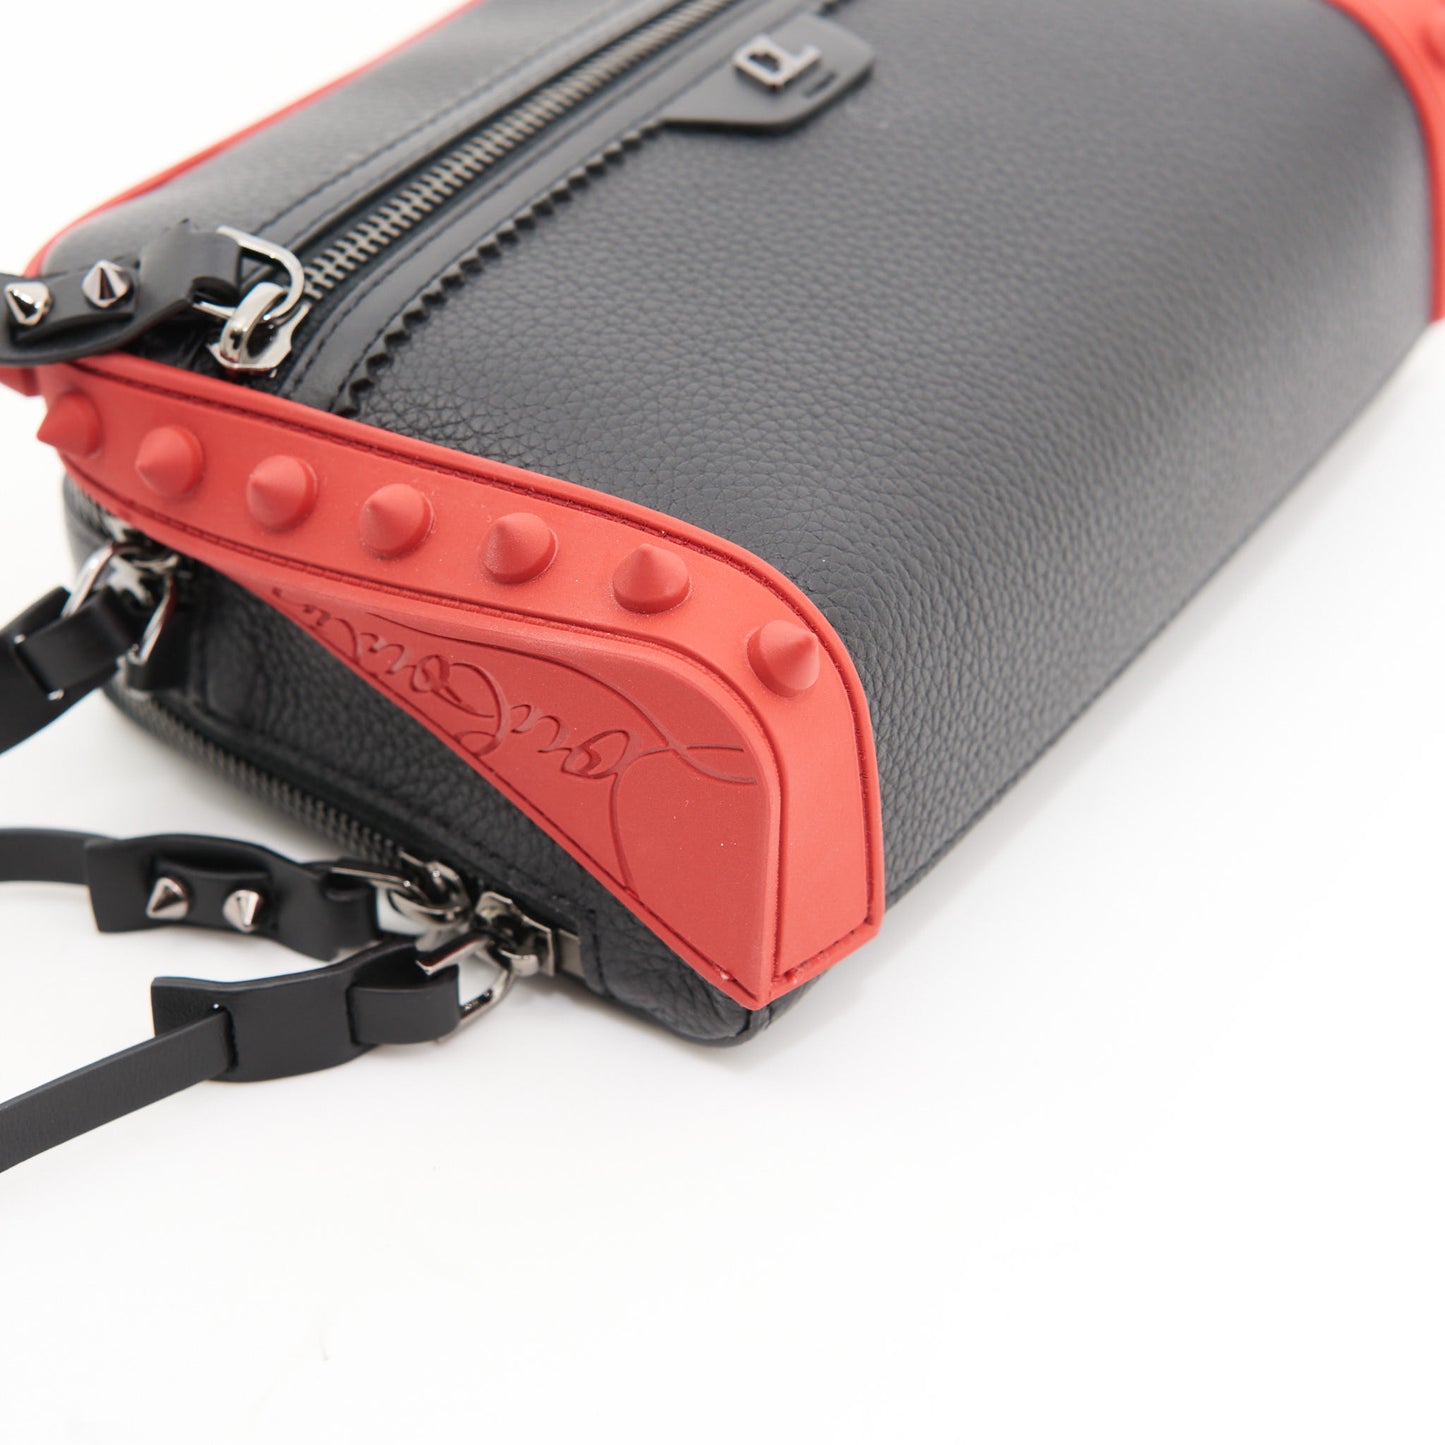 Christian Louboutin Zip Crossbody Bag in Black & Red